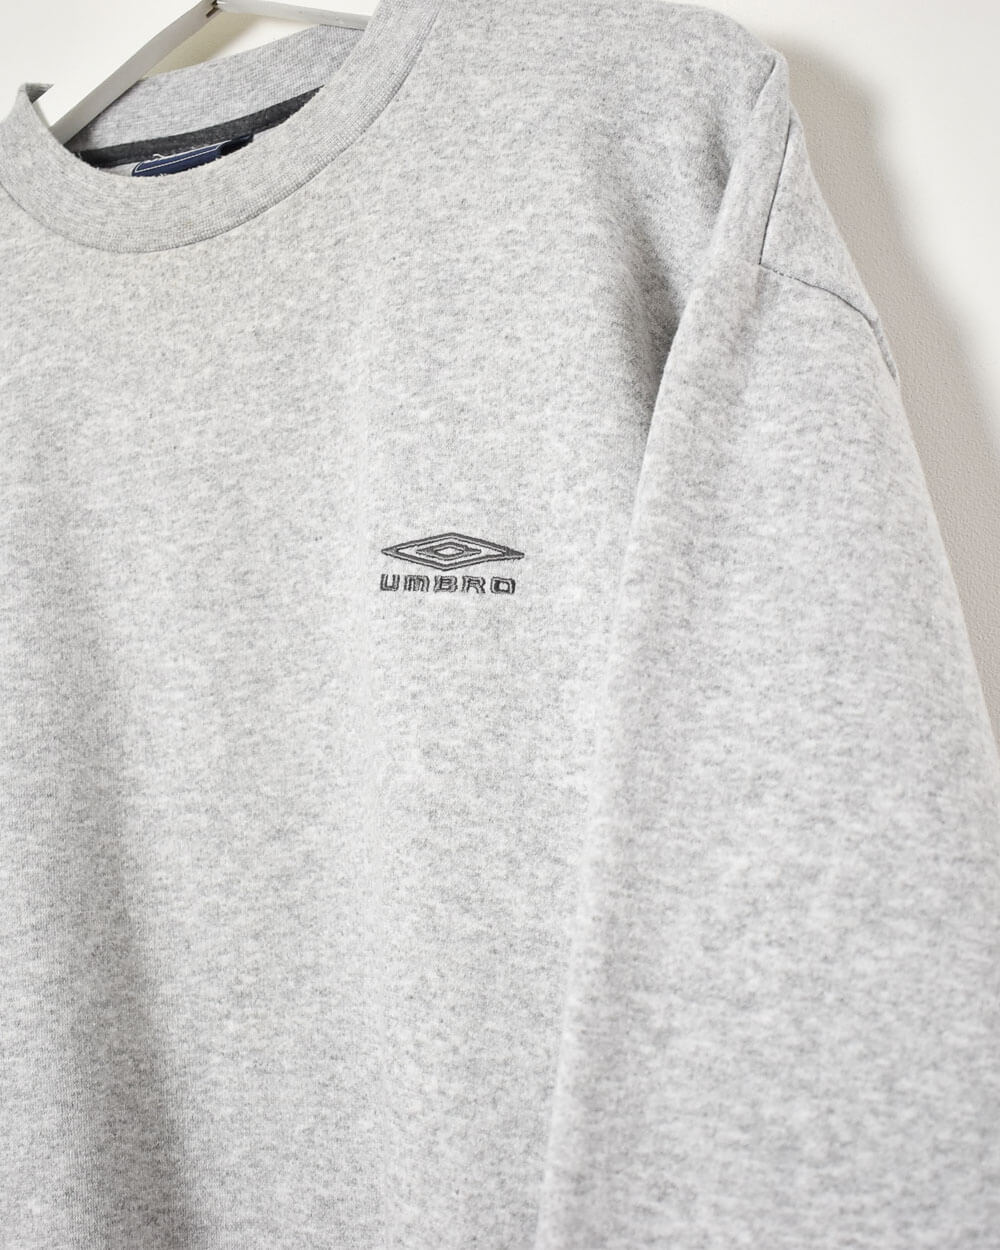 Umbro Sweatshirt - Large - Domno Vintage 90s, 80s, 00s Retro and Vintage Clothing 